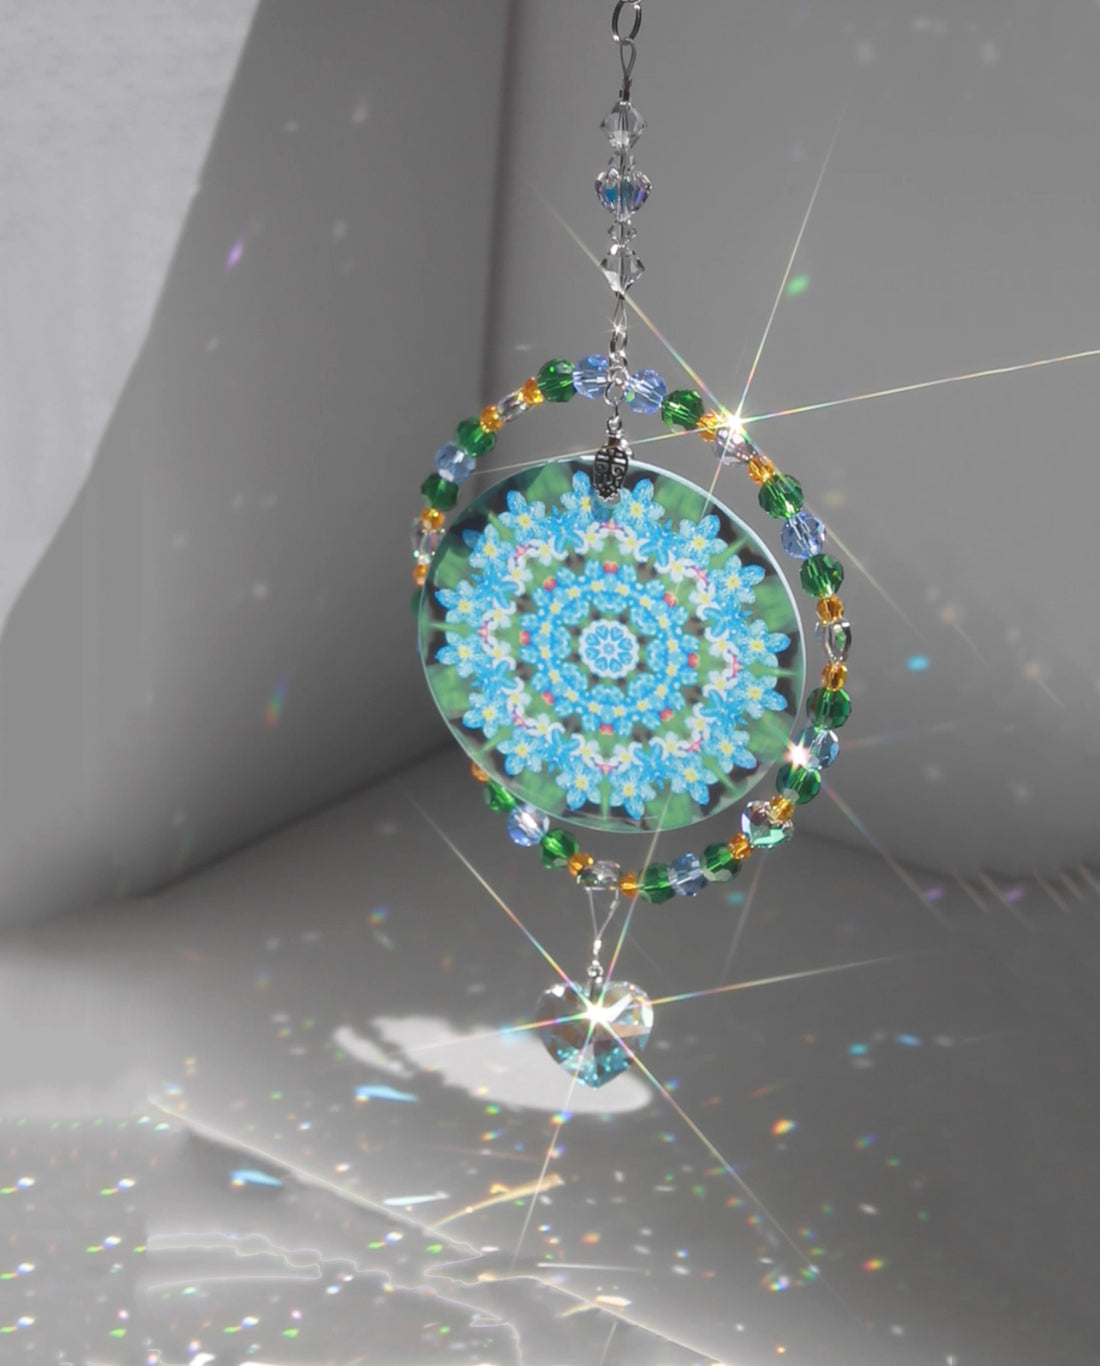 Suncatcher, Crystal Mobile, Brilliant Rainbow Maker Dewdrops Of Devotion